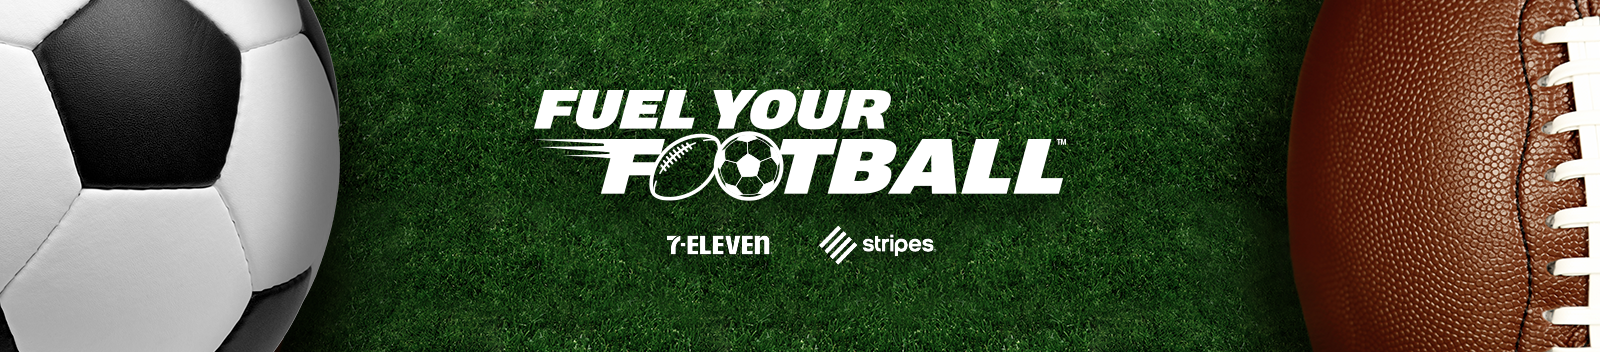 7-Eleven 'Fuel Your Football' Leaderboard Ad